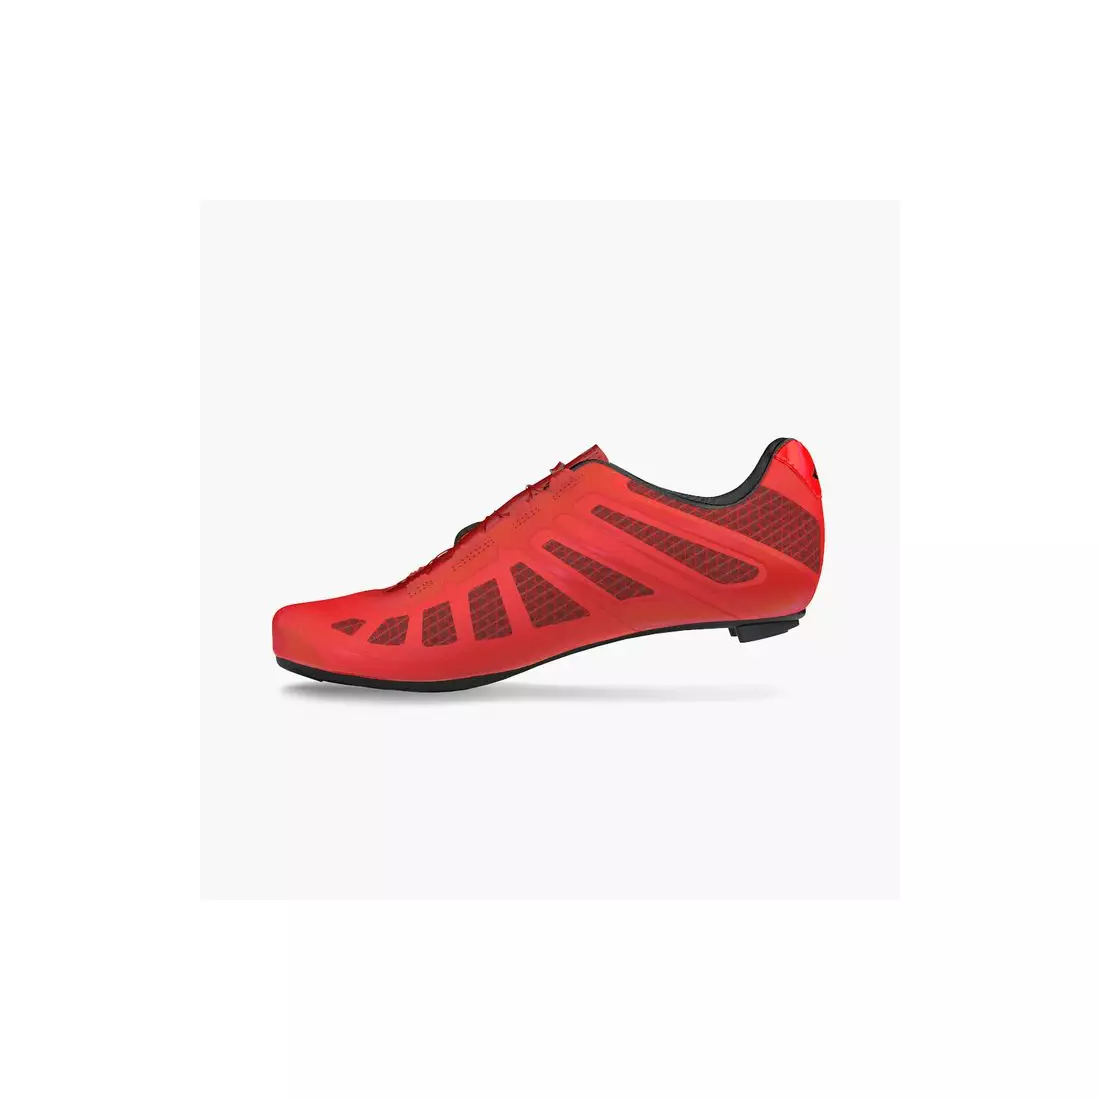 GIRO Férfi kerékpáros cipő IMPERIAL, bright red 